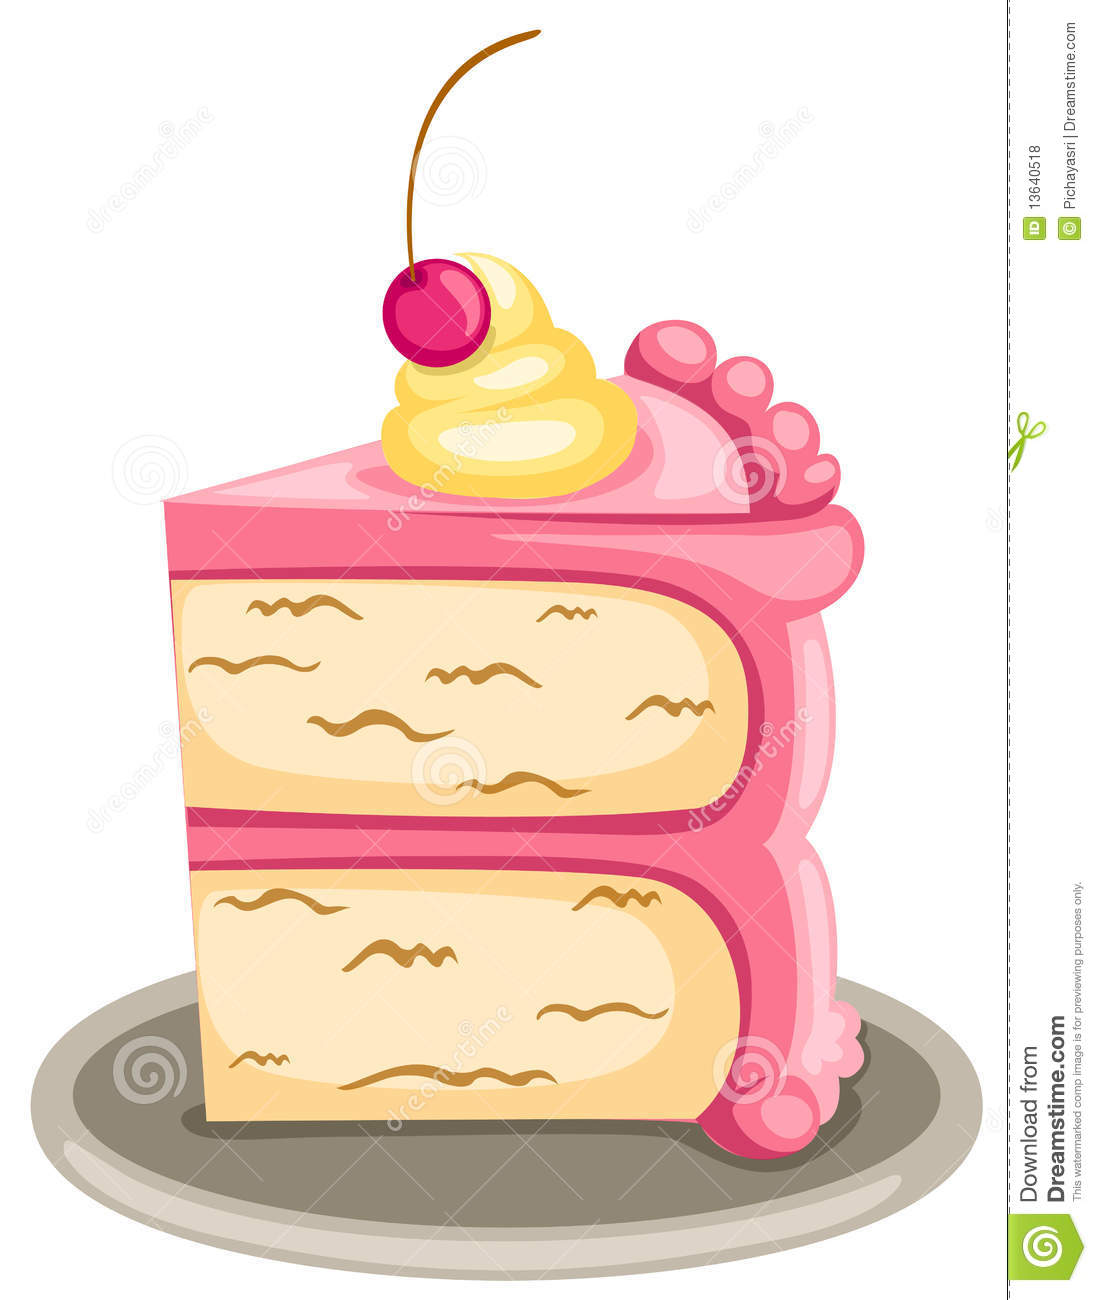 Illustration Of Isolated Piece Of Cake On White Background